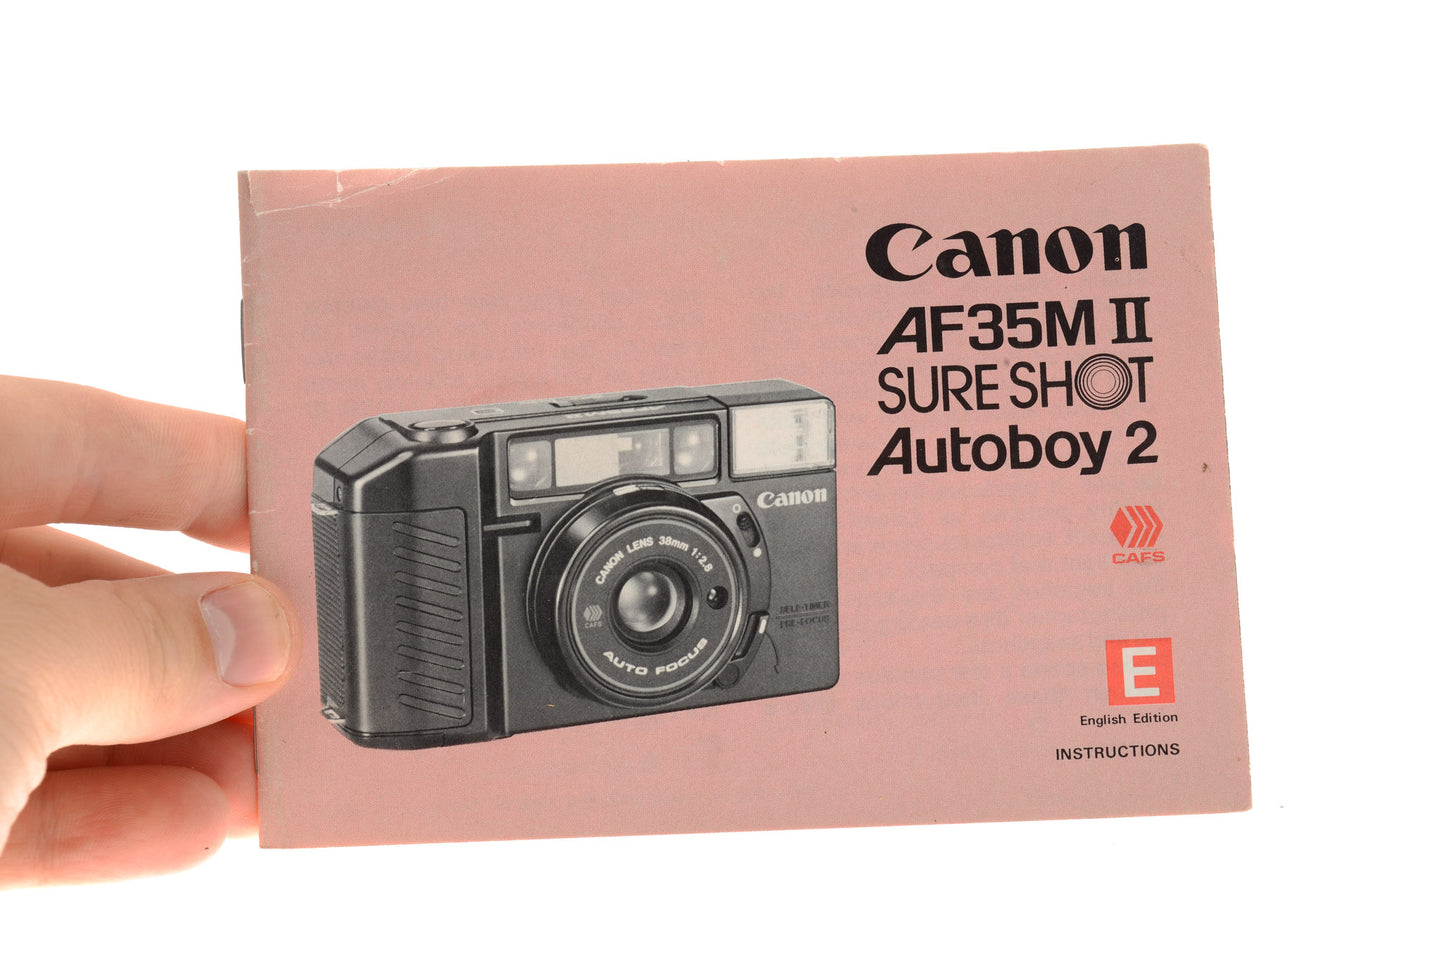 Canon AF35M II Sureshot Atoboy 2 Instructions